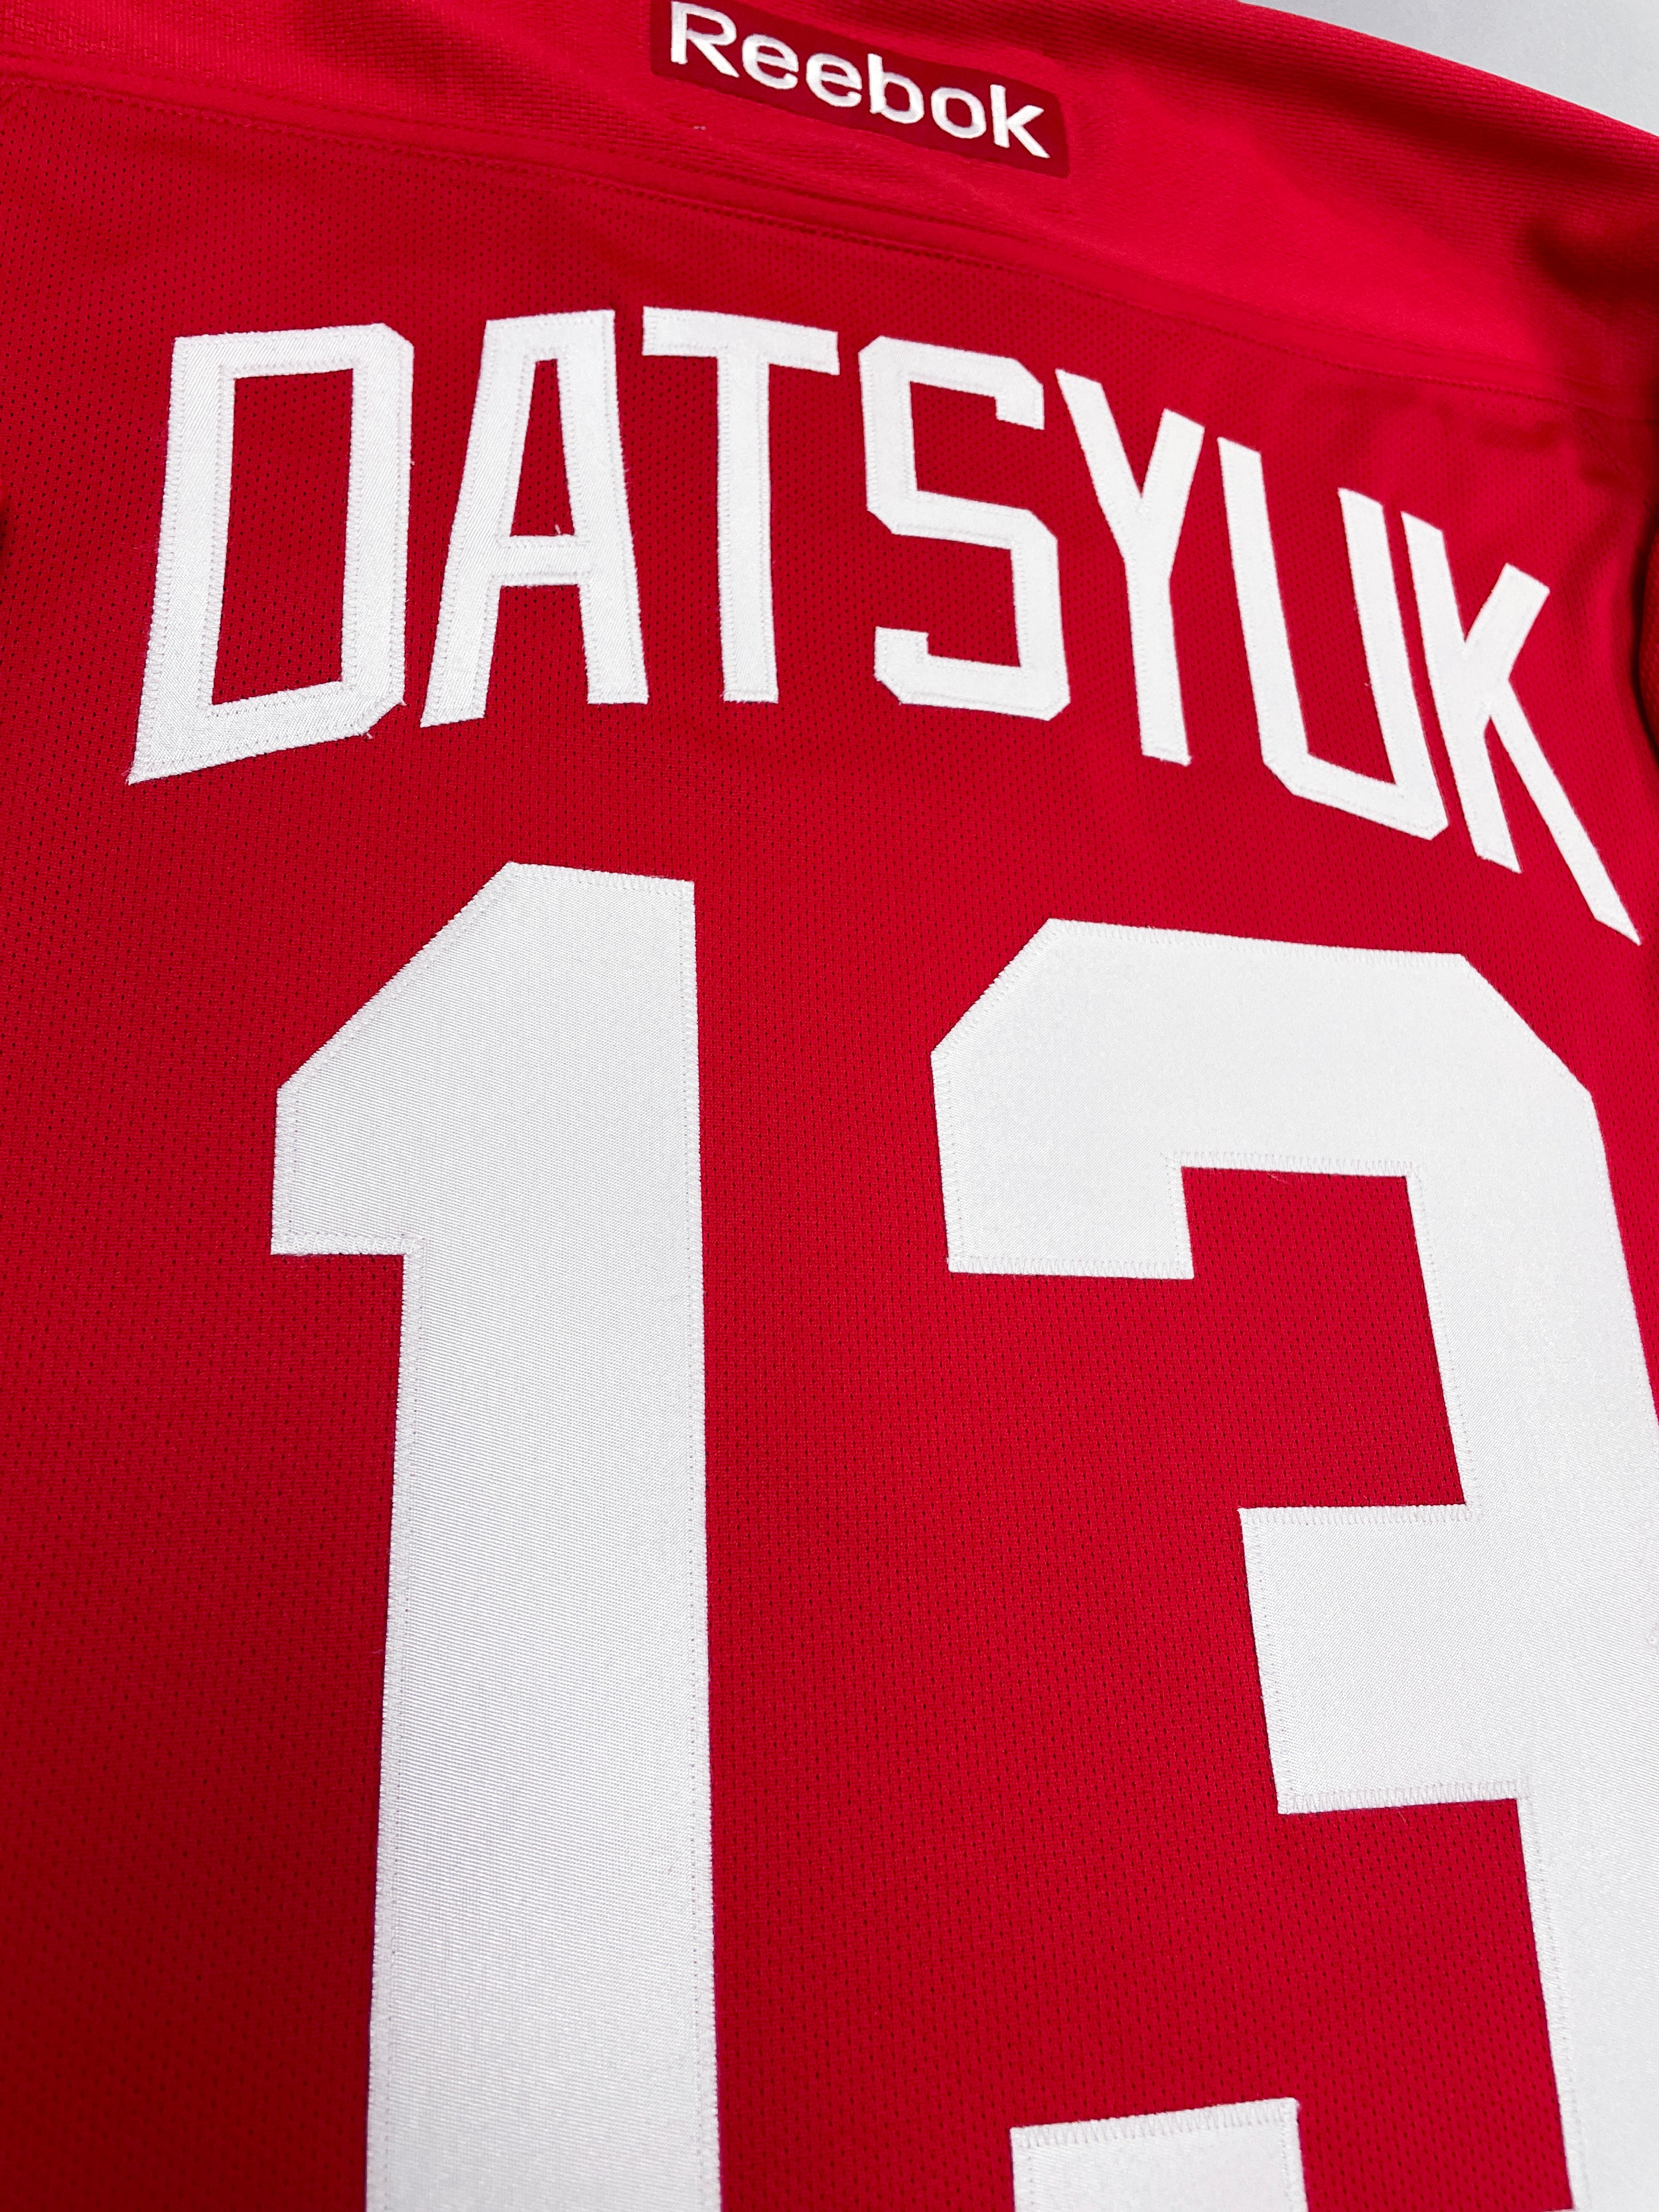 NHL Pavel Datsyuk Detroit Red Wings Premier Reebok Jersey - Black Ice